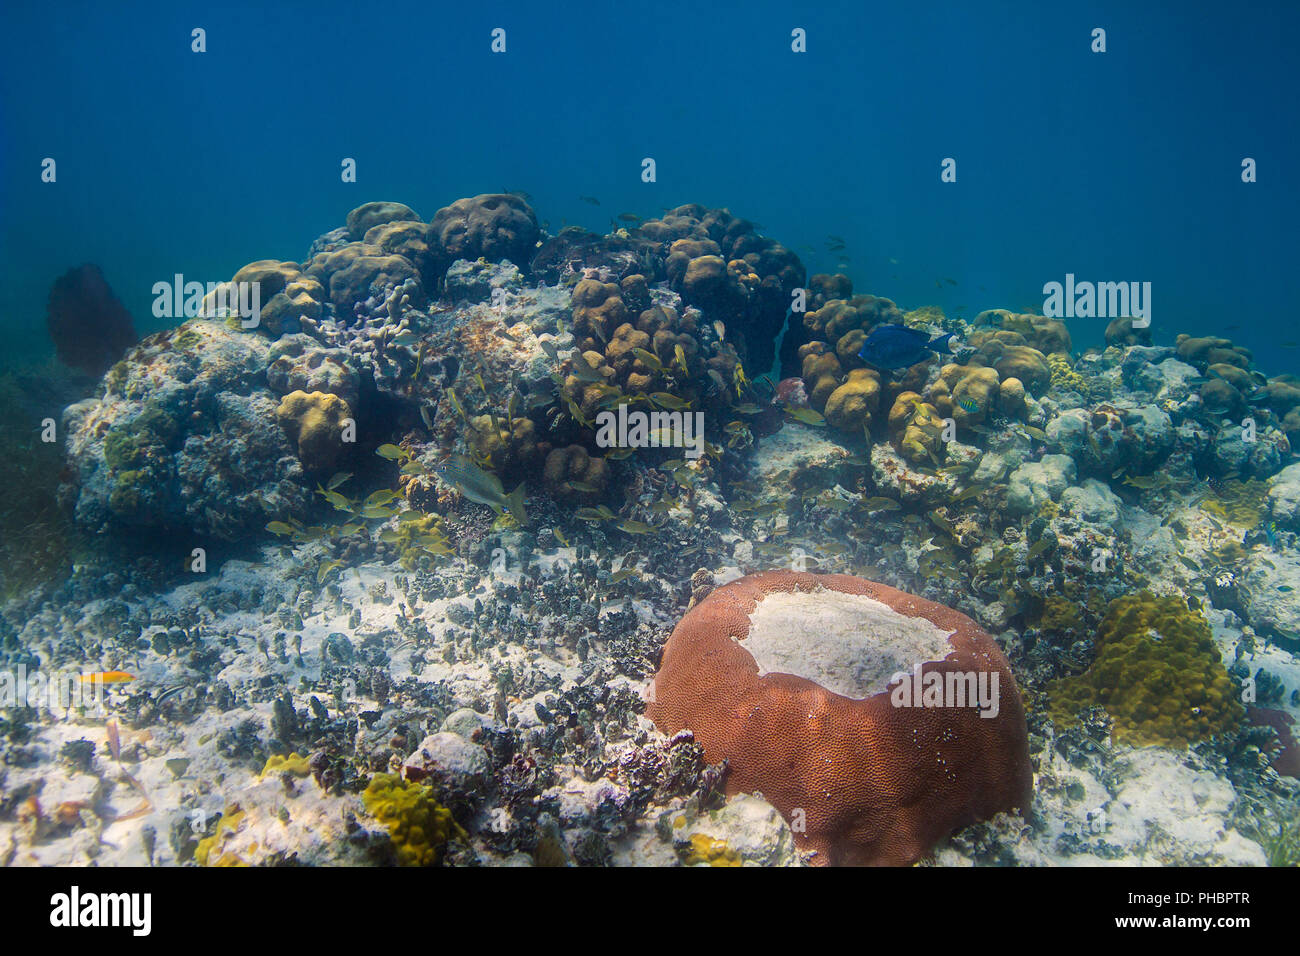 Ocean life in the reef Stock Photo